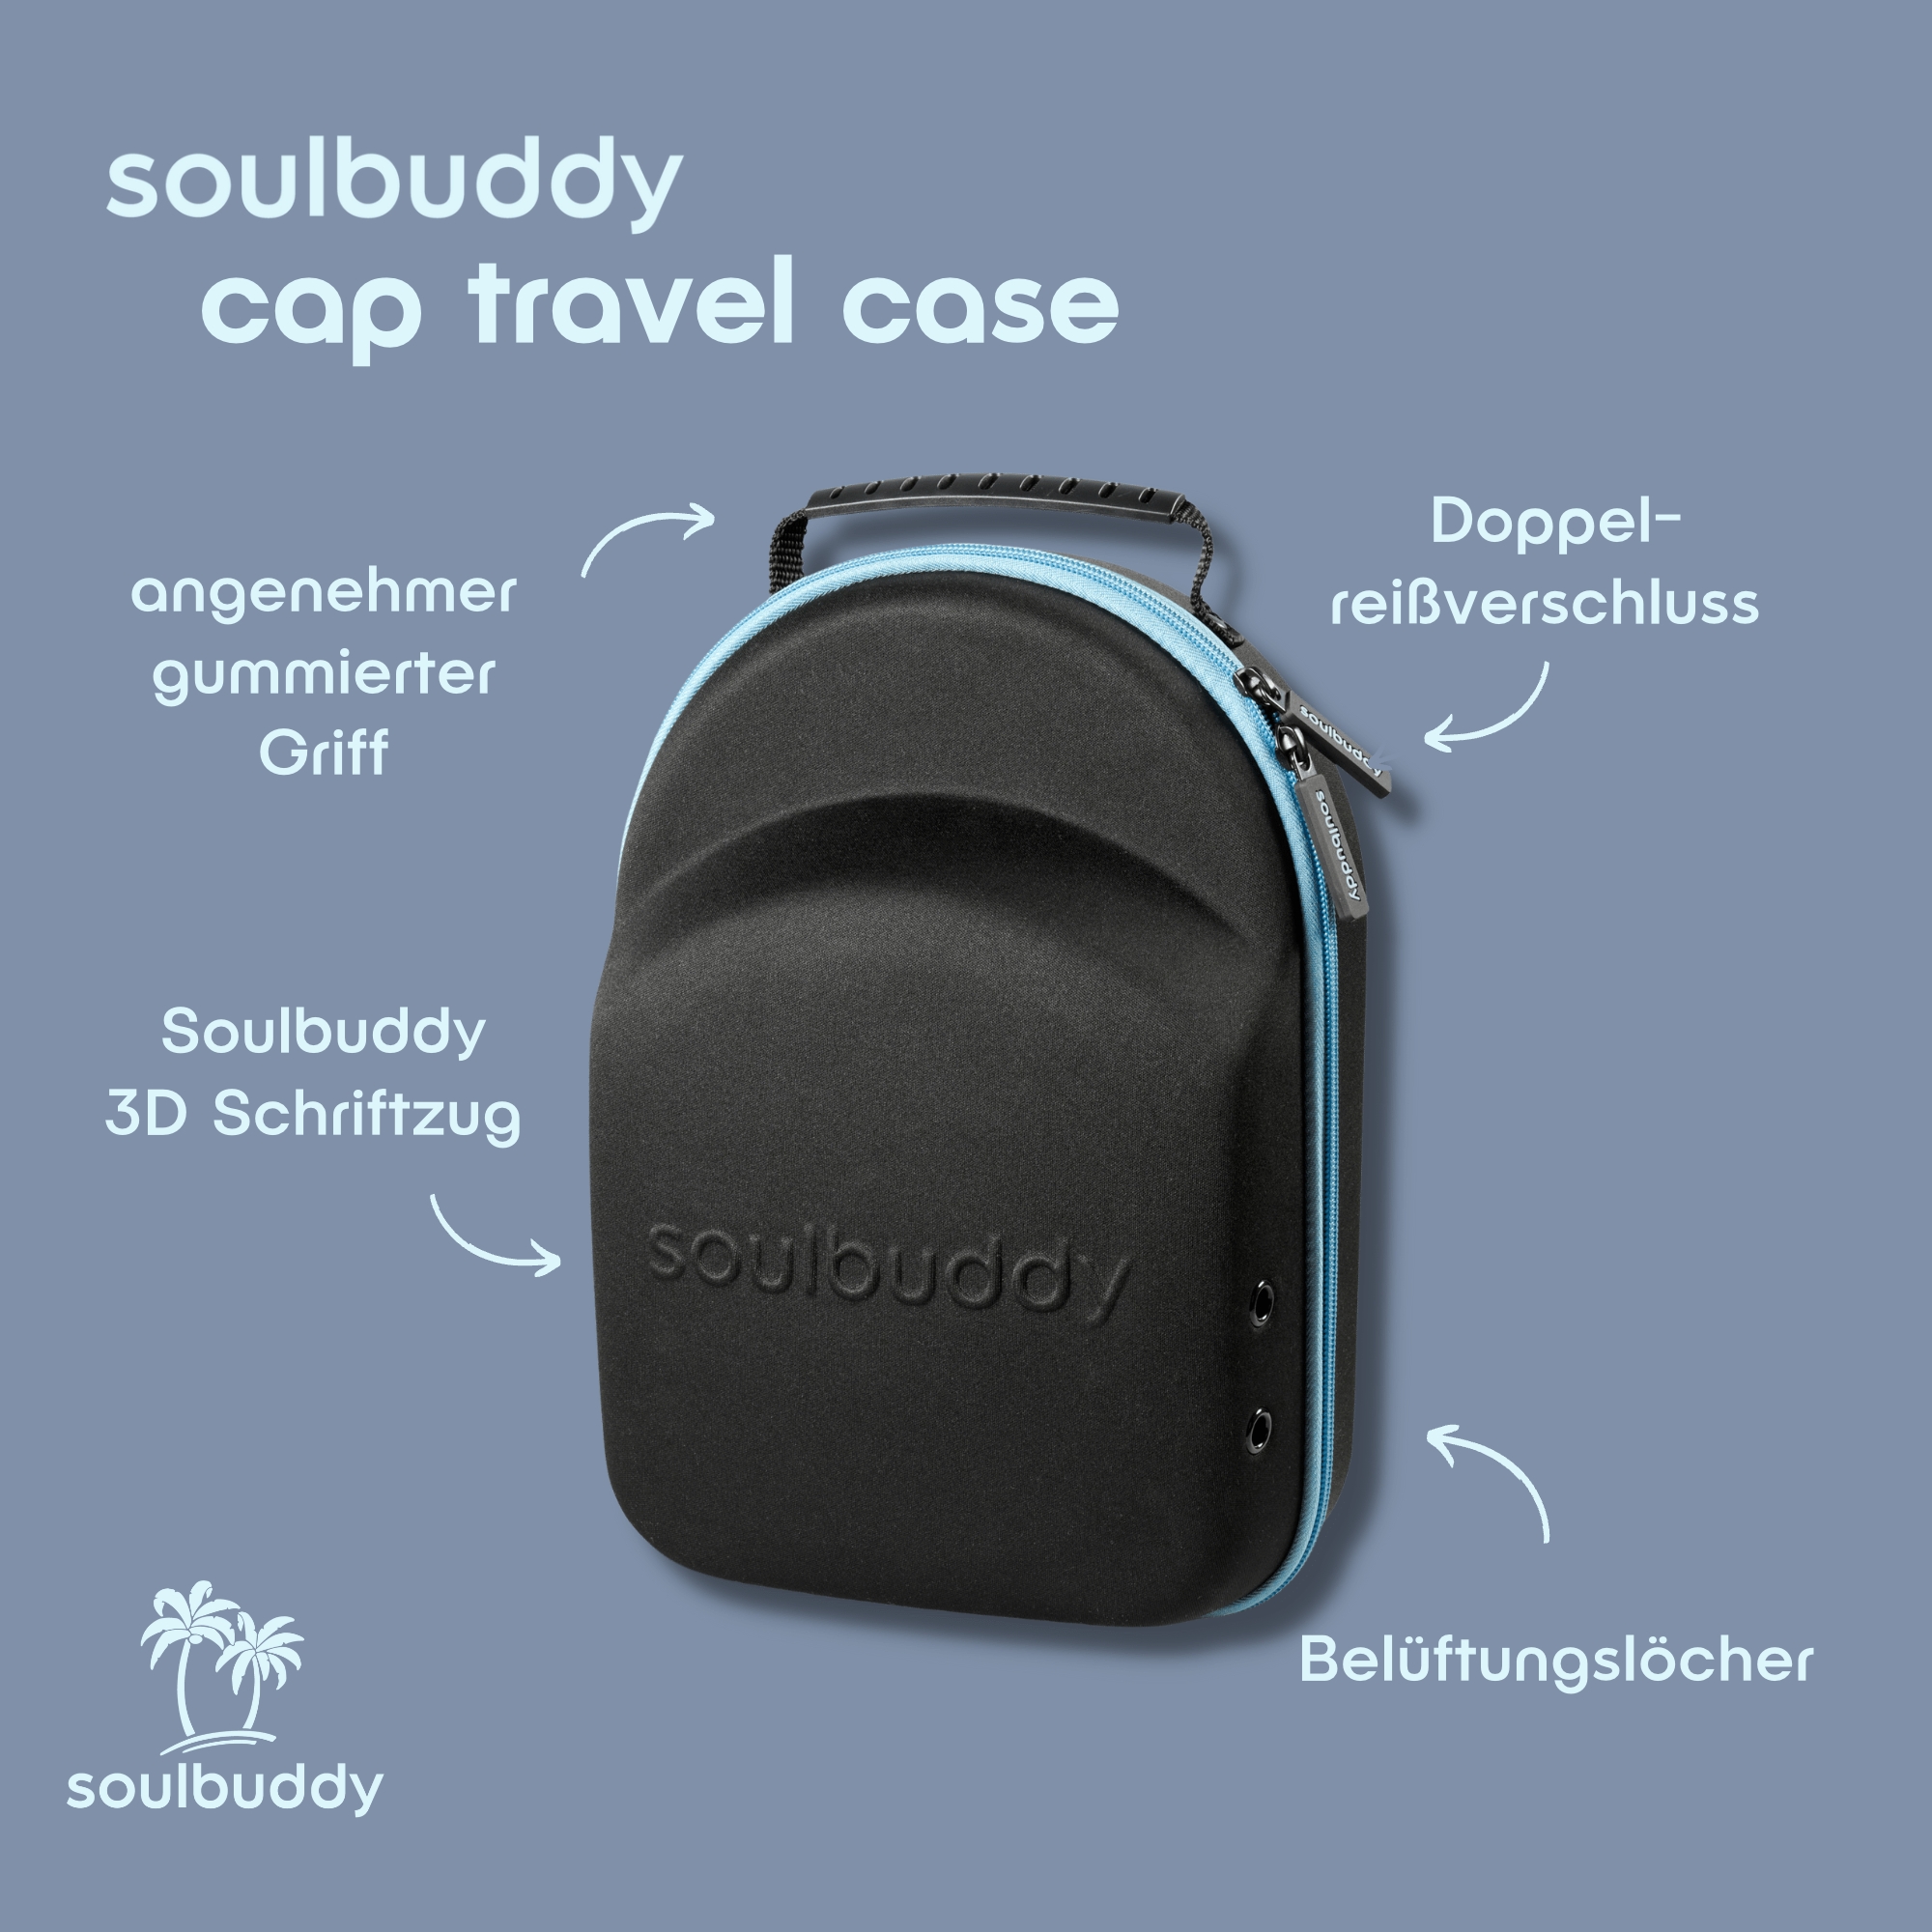 Soulbuddy Cap Travel Case mit Detailbeschreibung